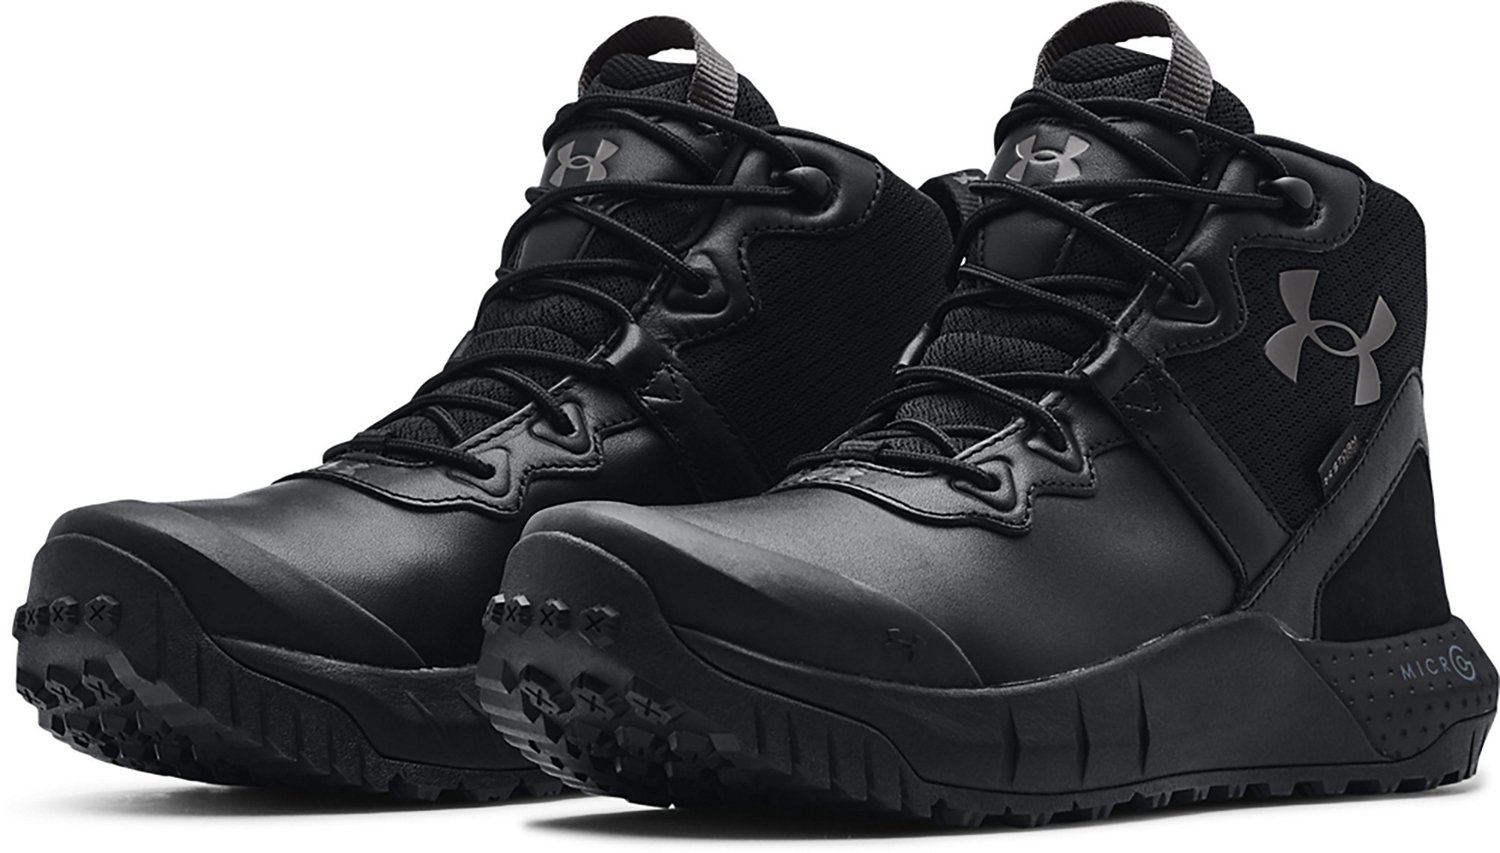 Under Armour Men's Micro G Valsetz Mid Leather Waterproof Boots | Academy